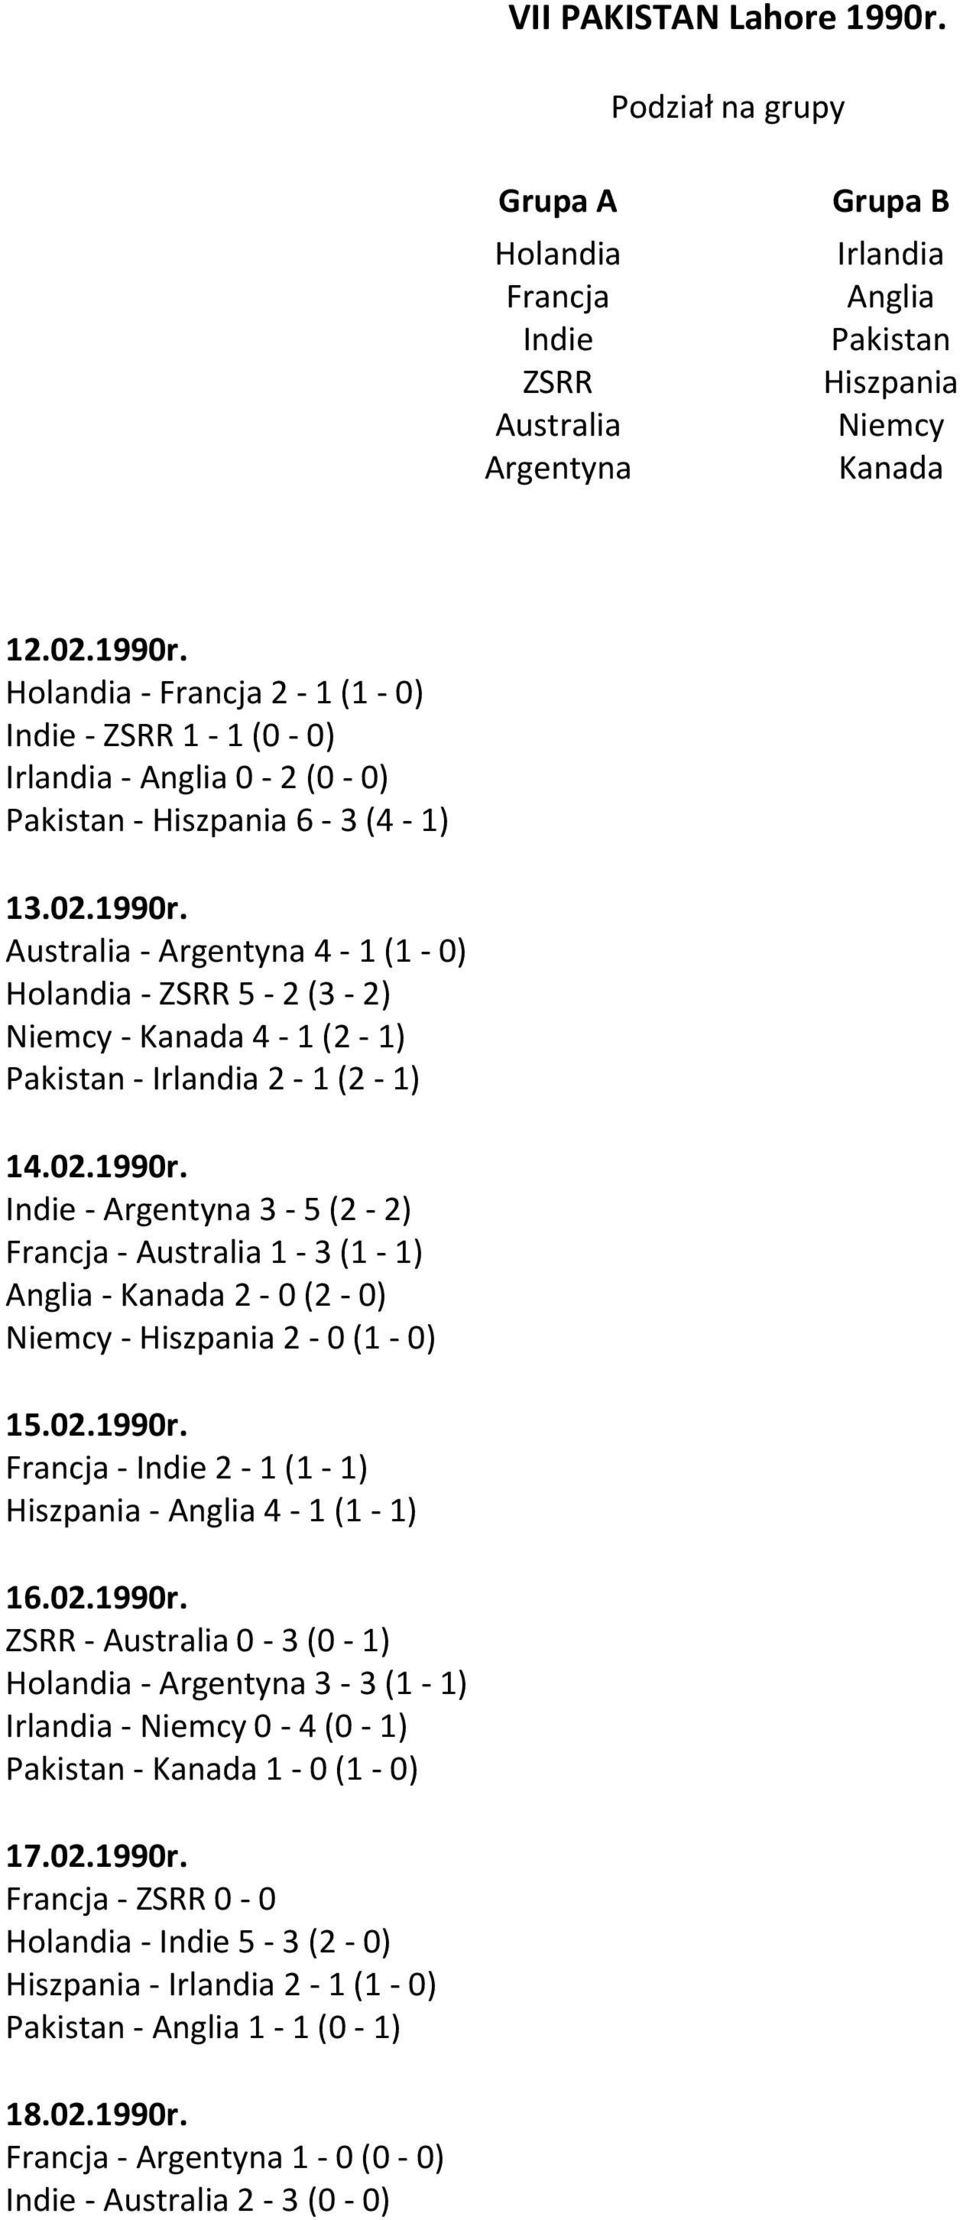 02.1990r. Francja - Indie 2-1 (1-1) Hiszpania - Anglia 4-1 (1-1) 16.02.1990r. ZSRR - Australia 0-3 (0-1) Holandia - Argentyna 3-3 (1-1) Irlandia - Niemcy 0-4 (0-1) Pakistan - Kanada 1-0 (1-0) 17.02.1990r. Francja - ZSRR 0-0 Holandia - Indie 5-3 (2-0) Hiszpania - Irlandia 2-1 (1-0) Pakistan - Anglia 1-1 (0-1) 18.